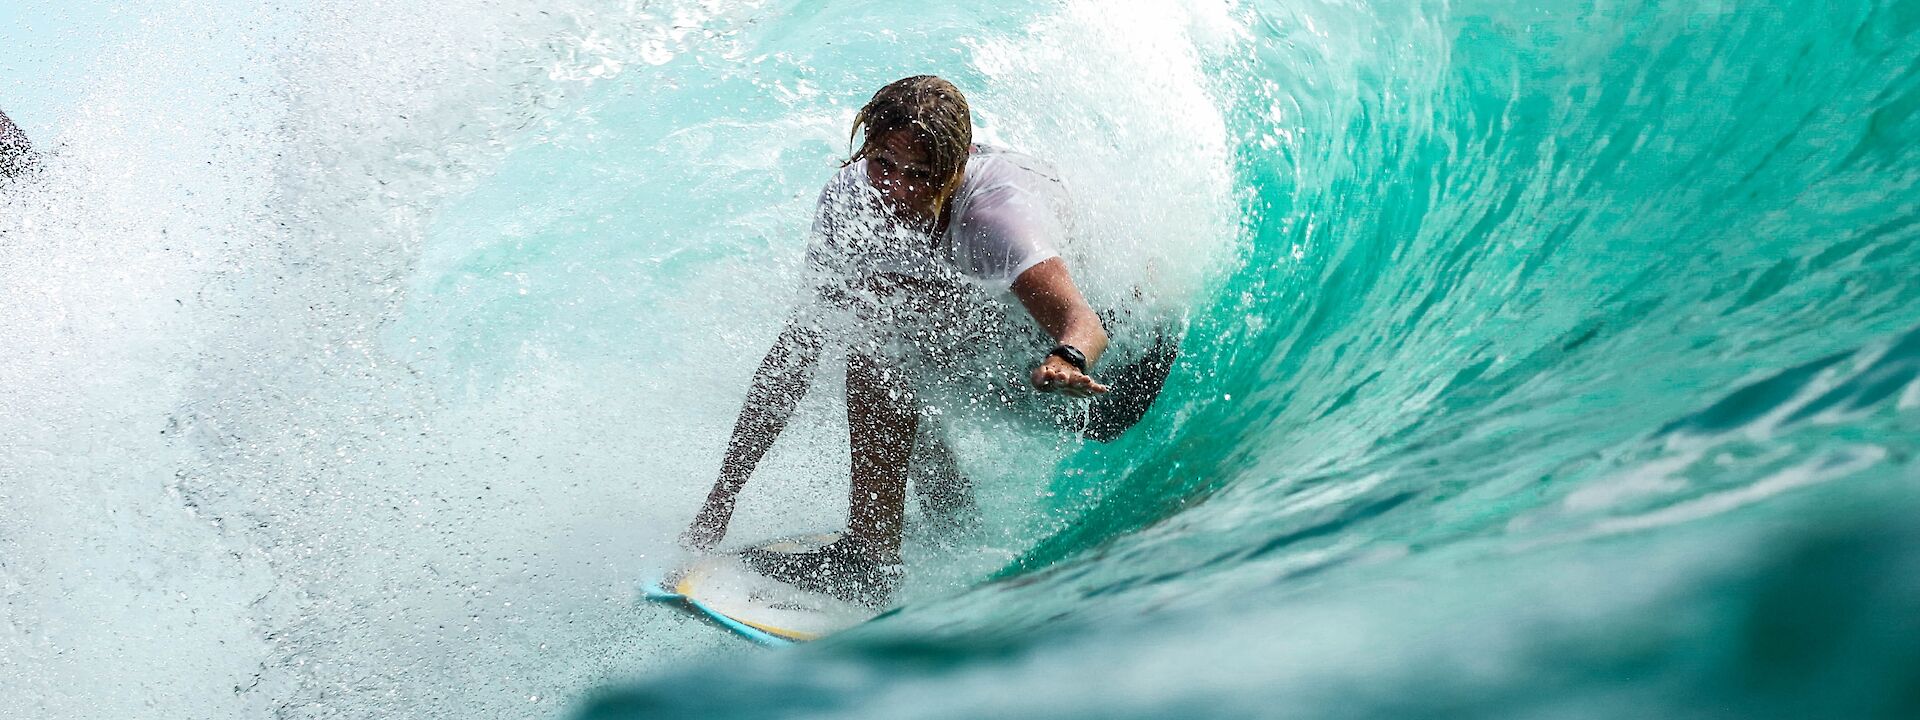 Surfer, Indonesia. Jeremy Bishop@Unsplash